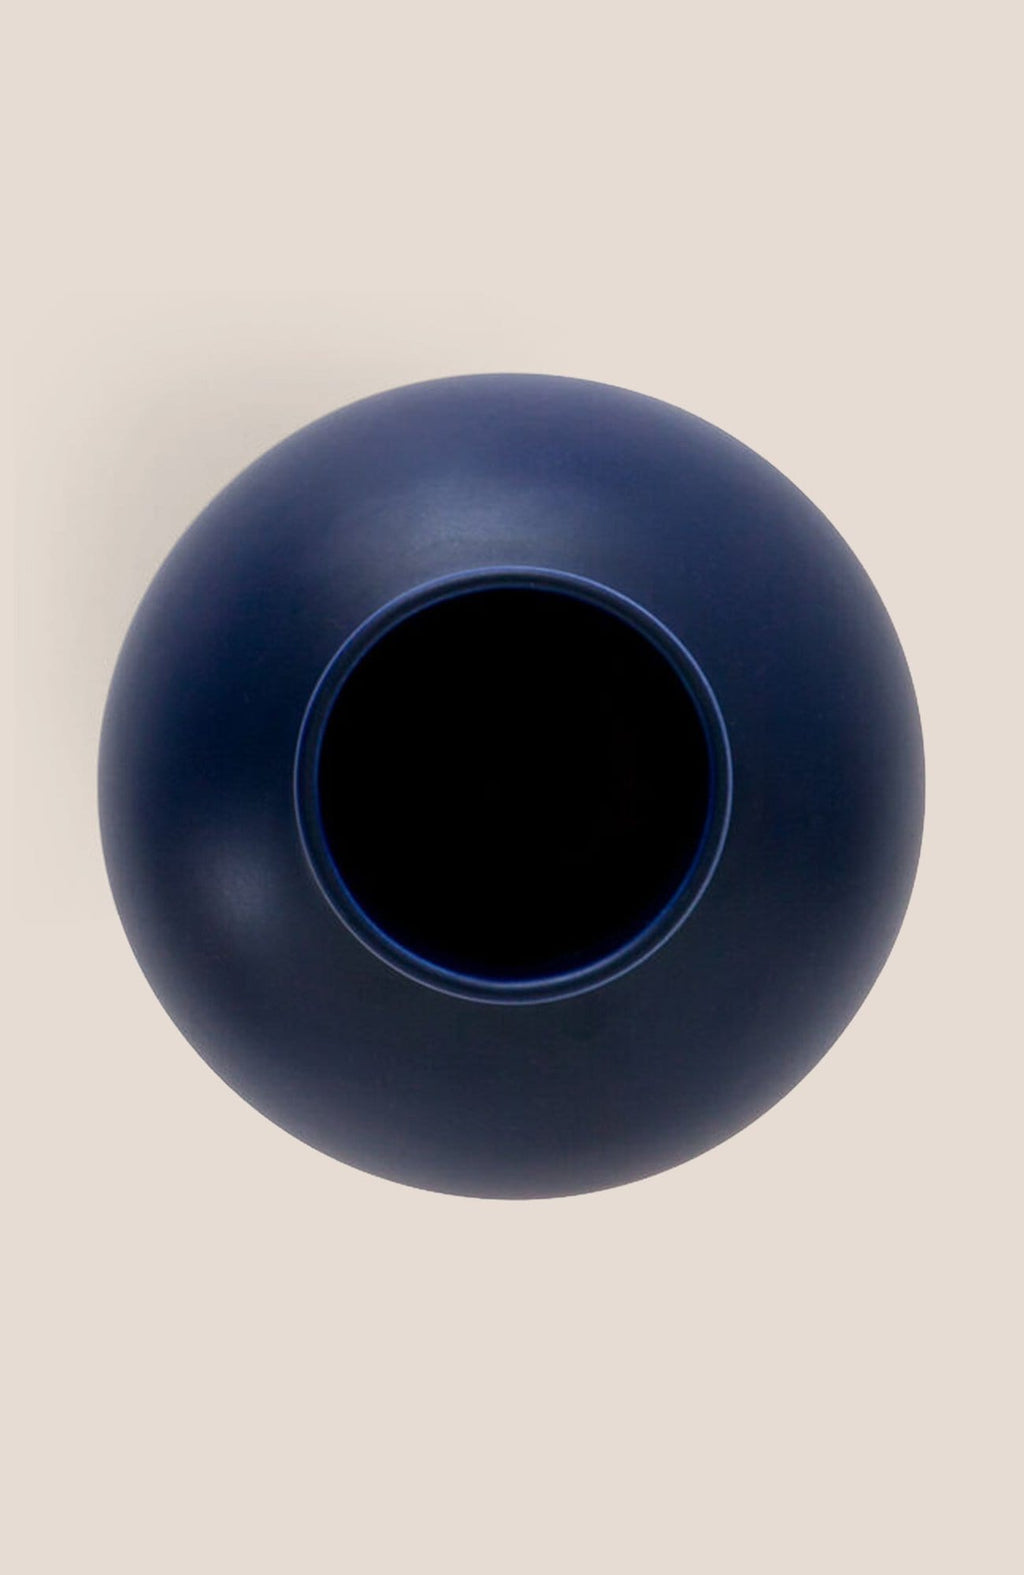 Raawii Strøm Vase - Blue 9.5h x 7"diam - Home Decor | Shop Baskets, Ceramics, Pillows, Rugs & Wall Hangs online